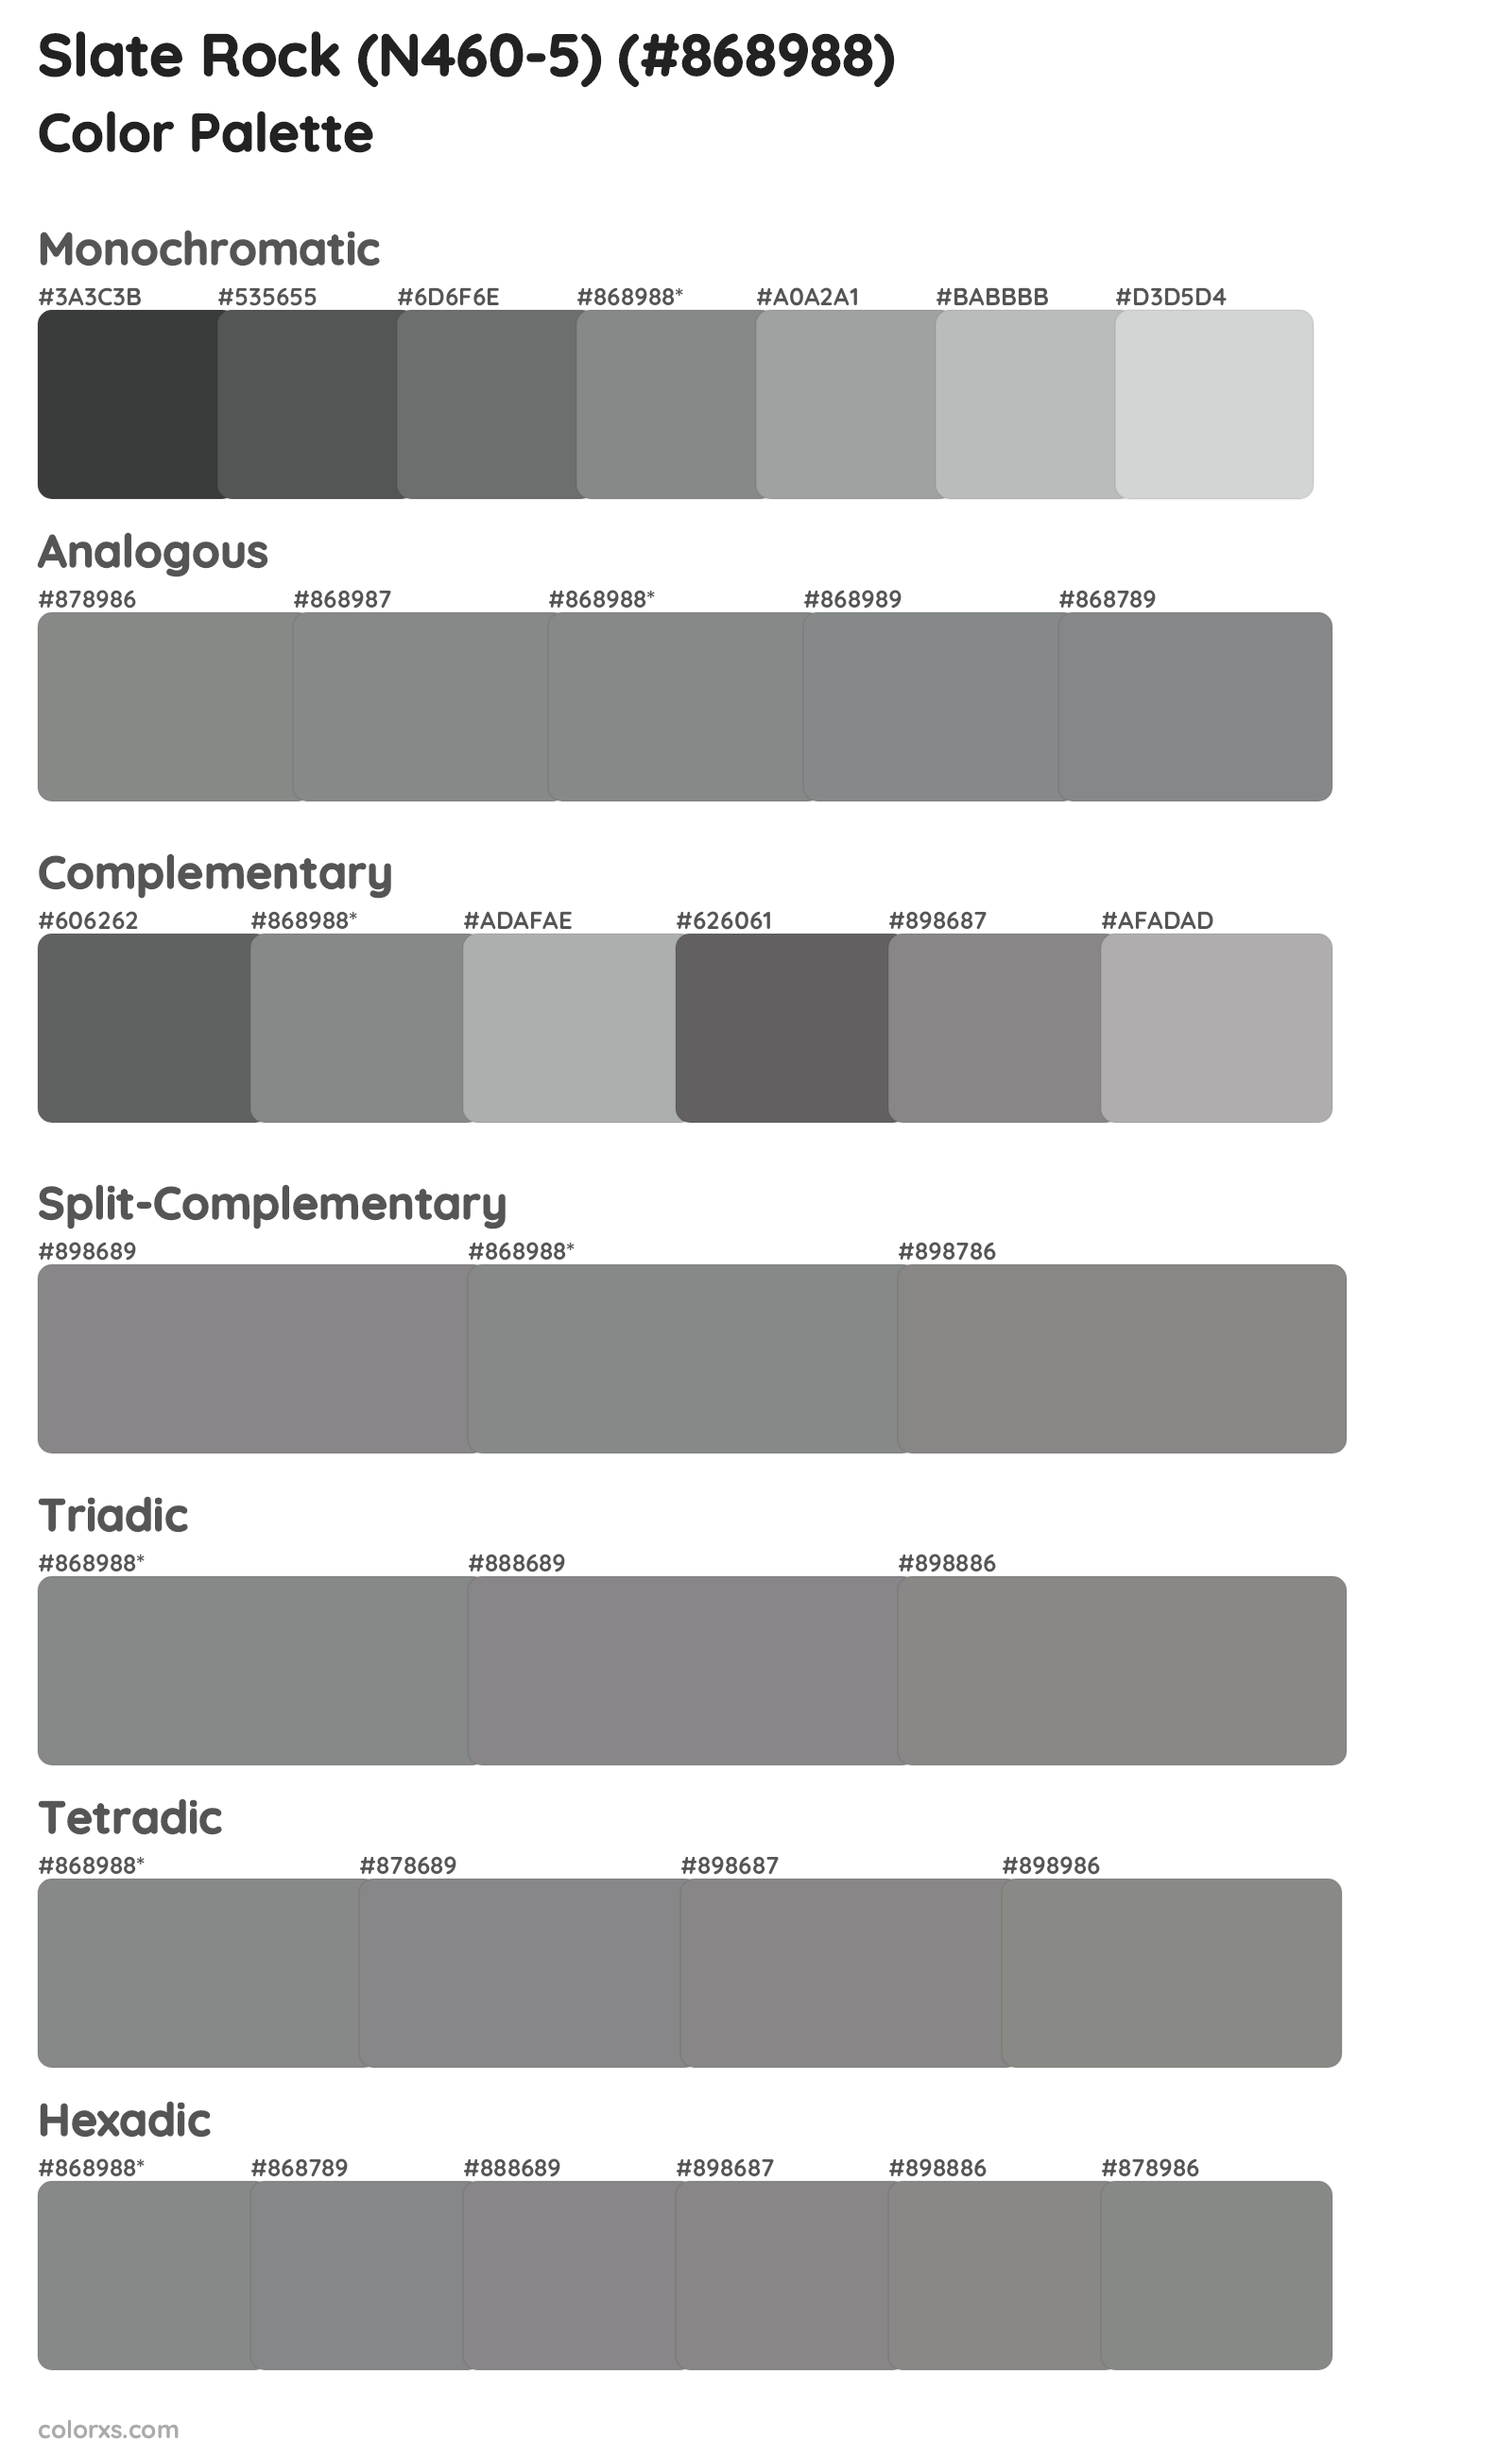 Slate Rock (N460-5) Color Scheme Palettes